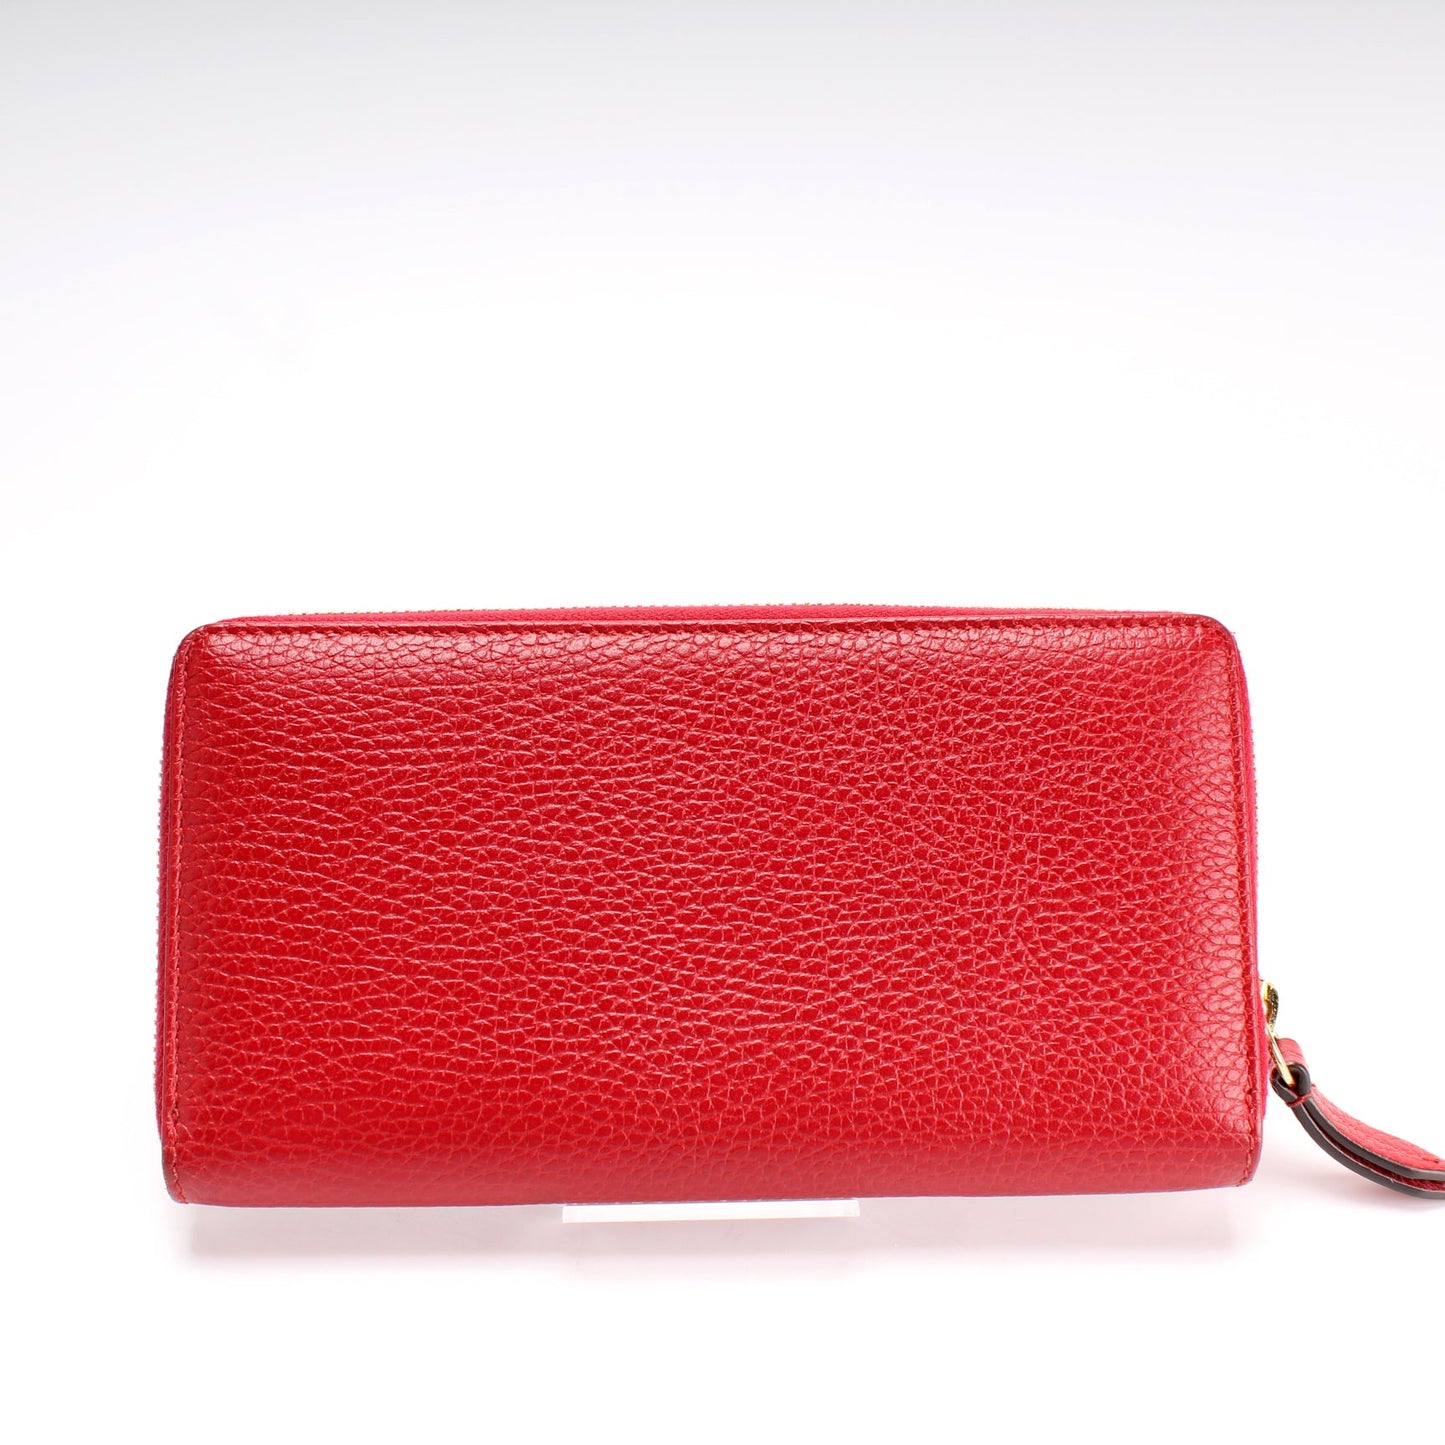 456117 Gucci Leather Zip Around Wallet